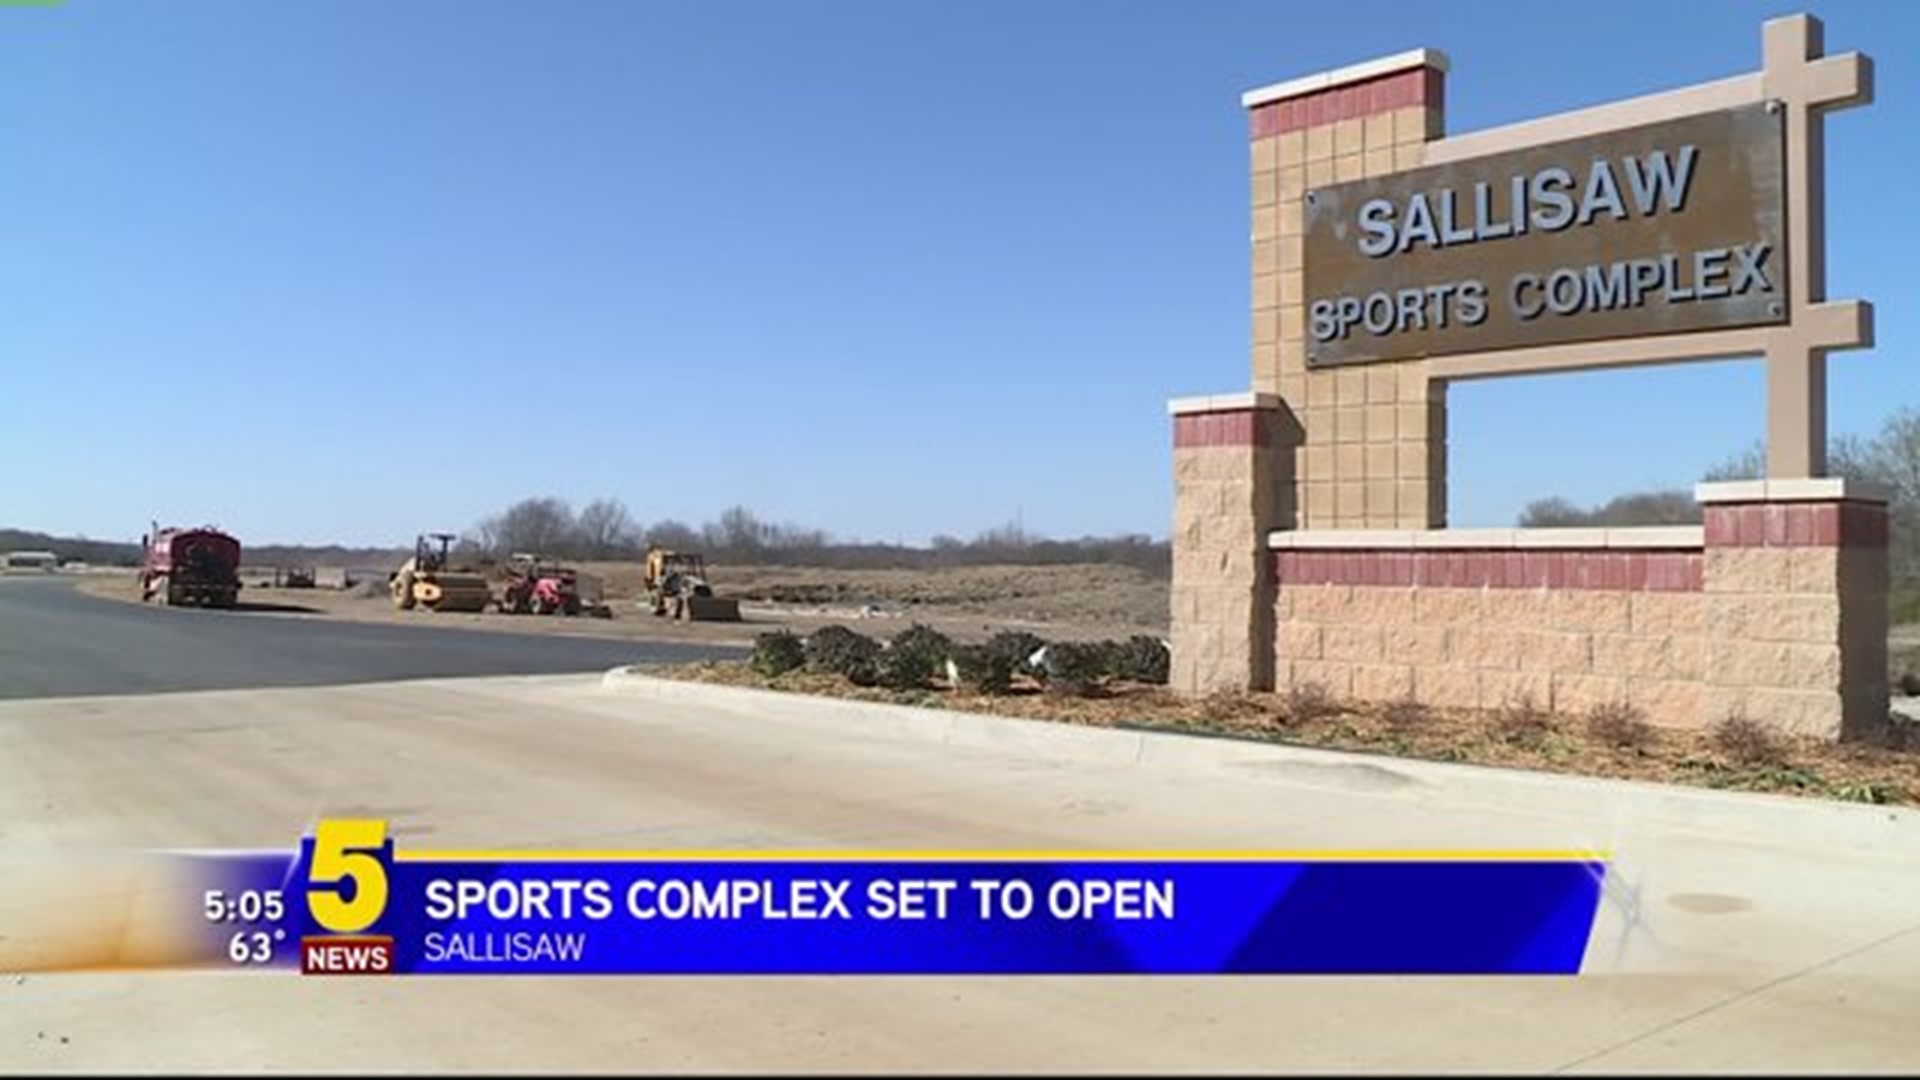 Sallisaw Sports Complex Set To Open